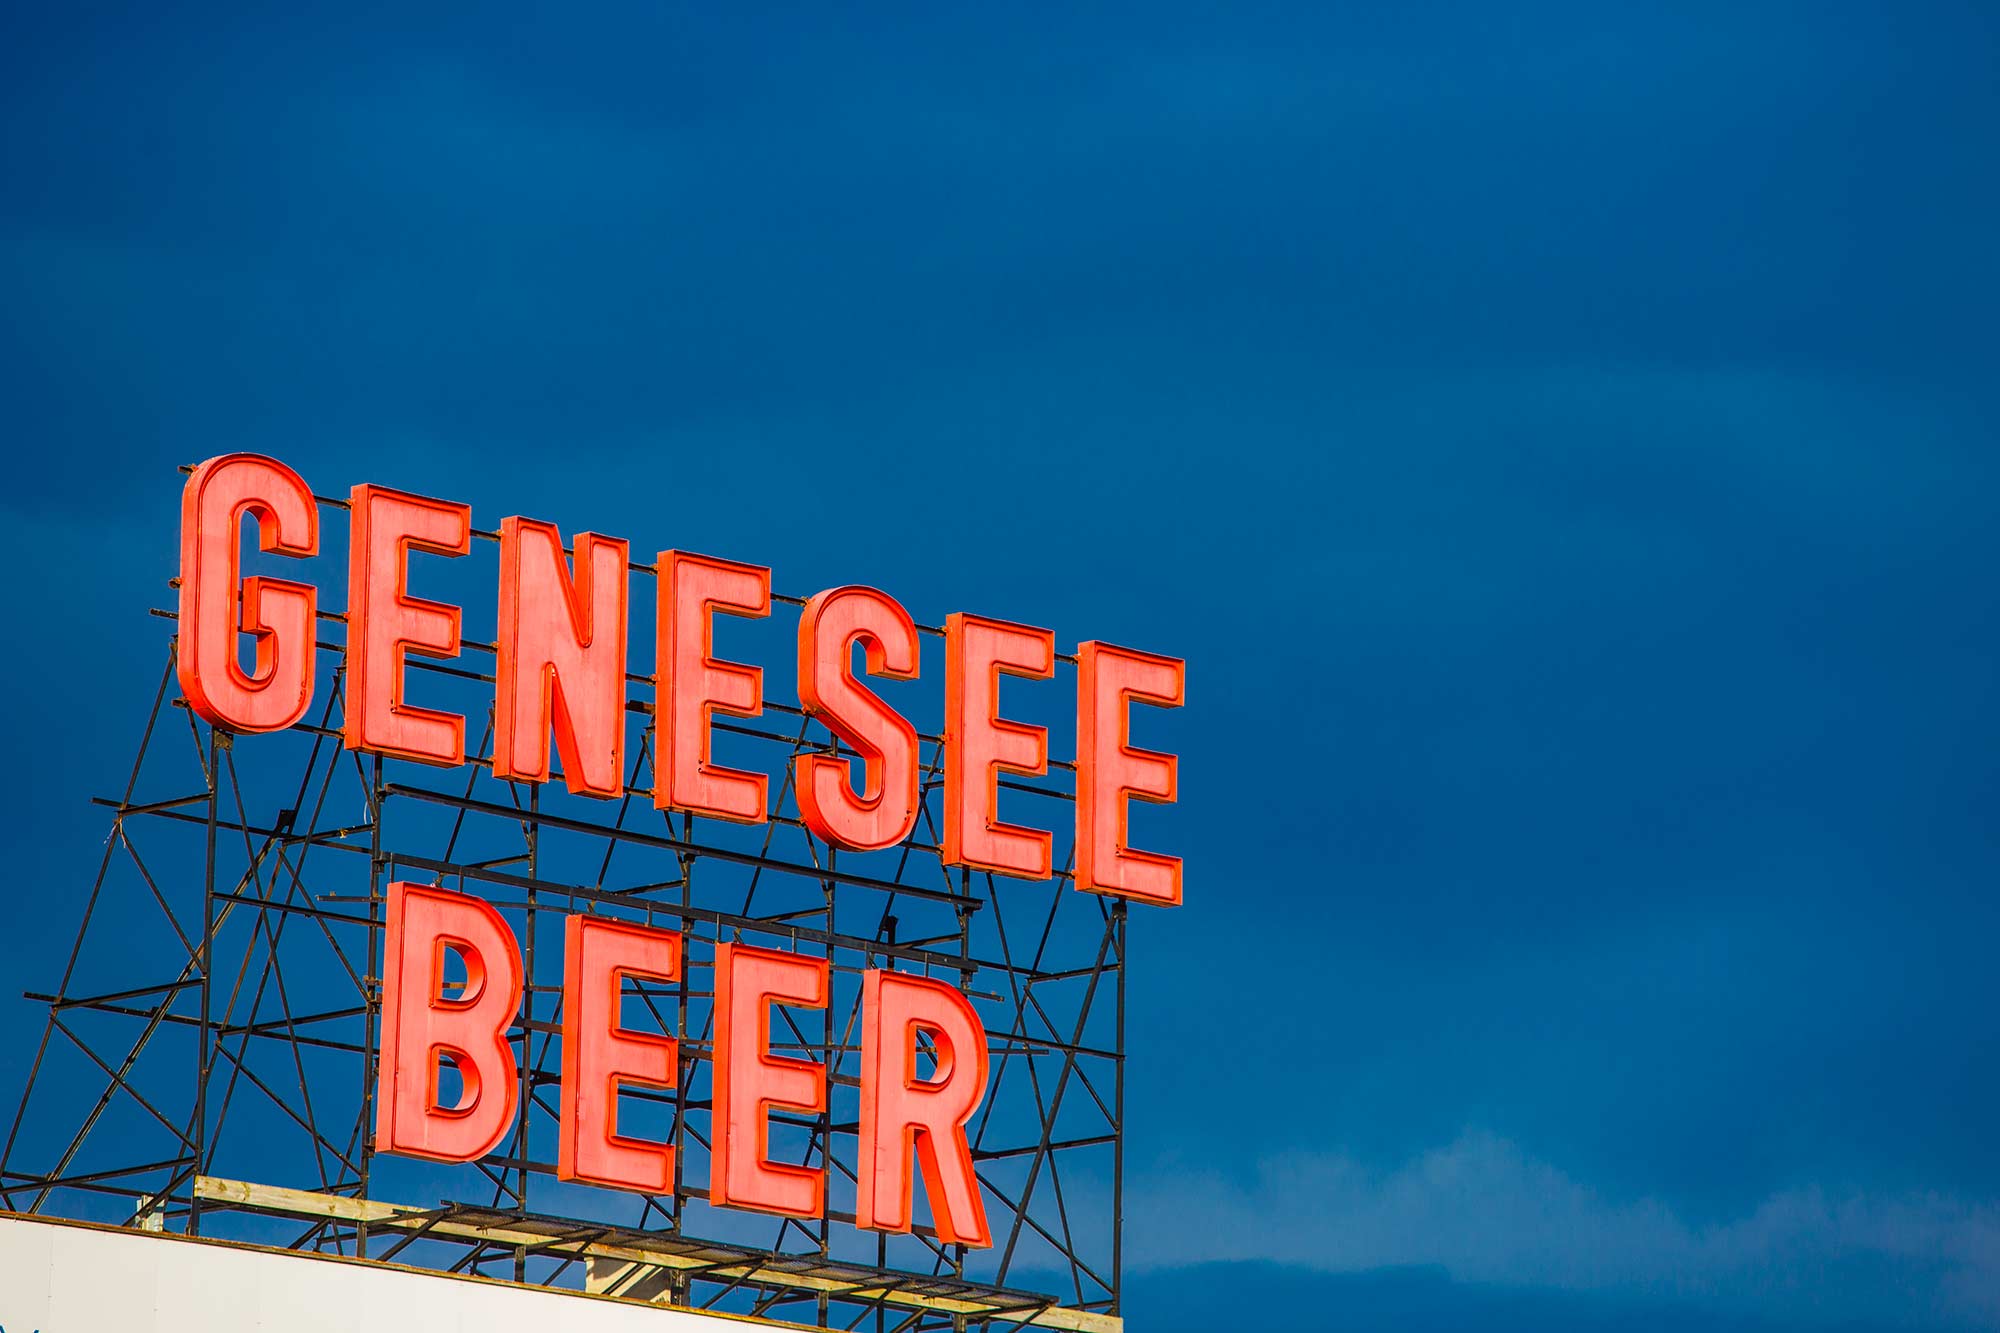 Genesee Beer, Auburn, NY - 11/7